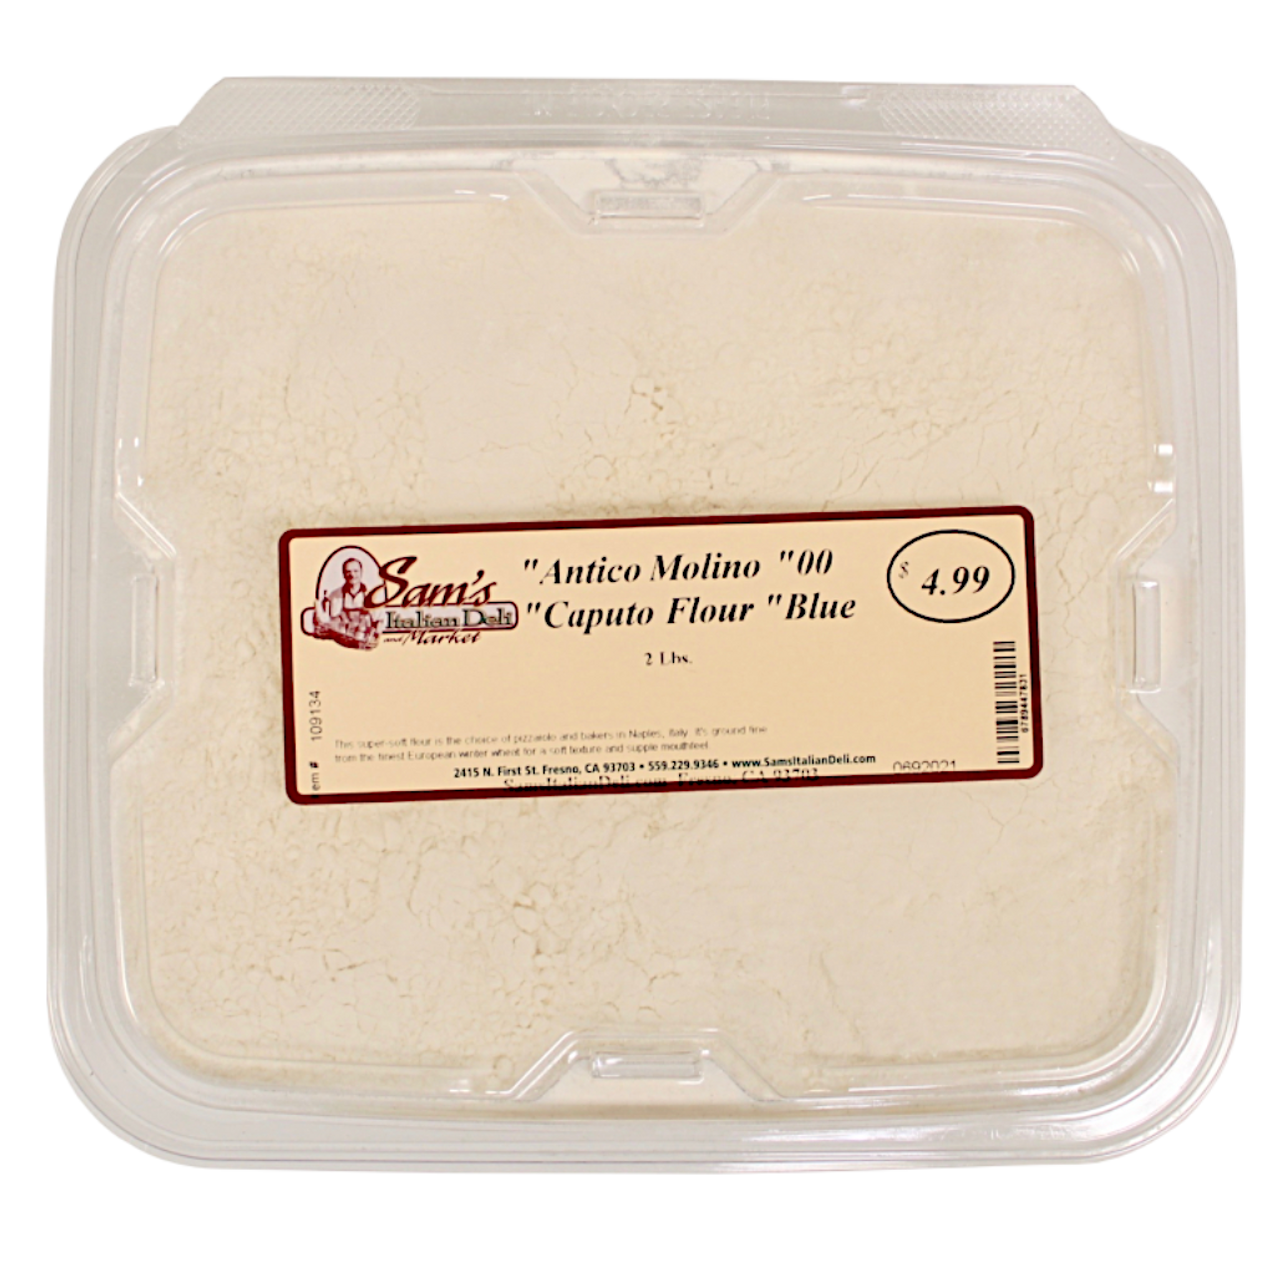 Caputo Lievito Dry Yeast – Caputo Flour